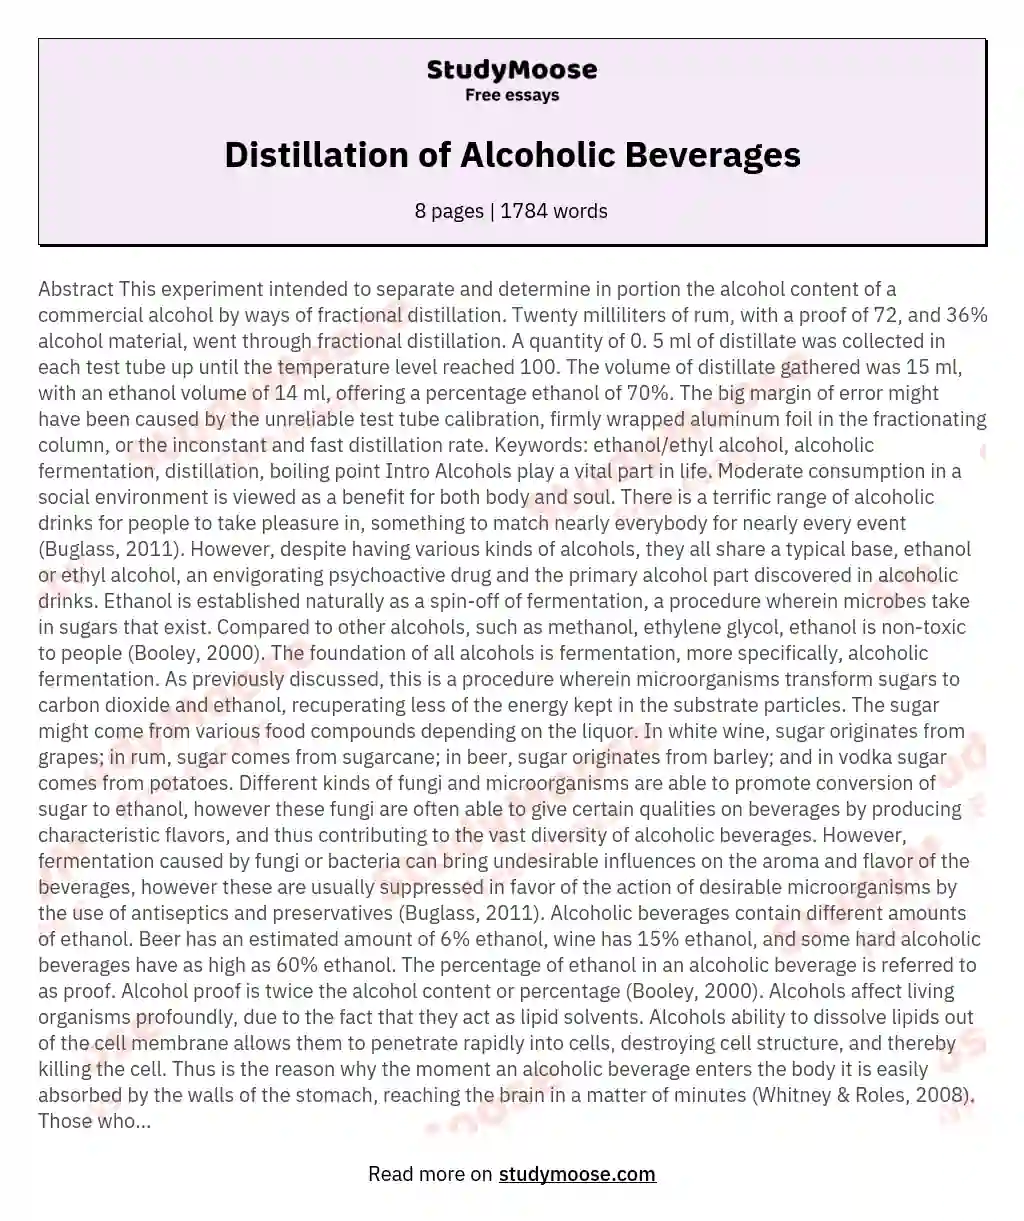 Distillation of Alcoholic Beverages essay